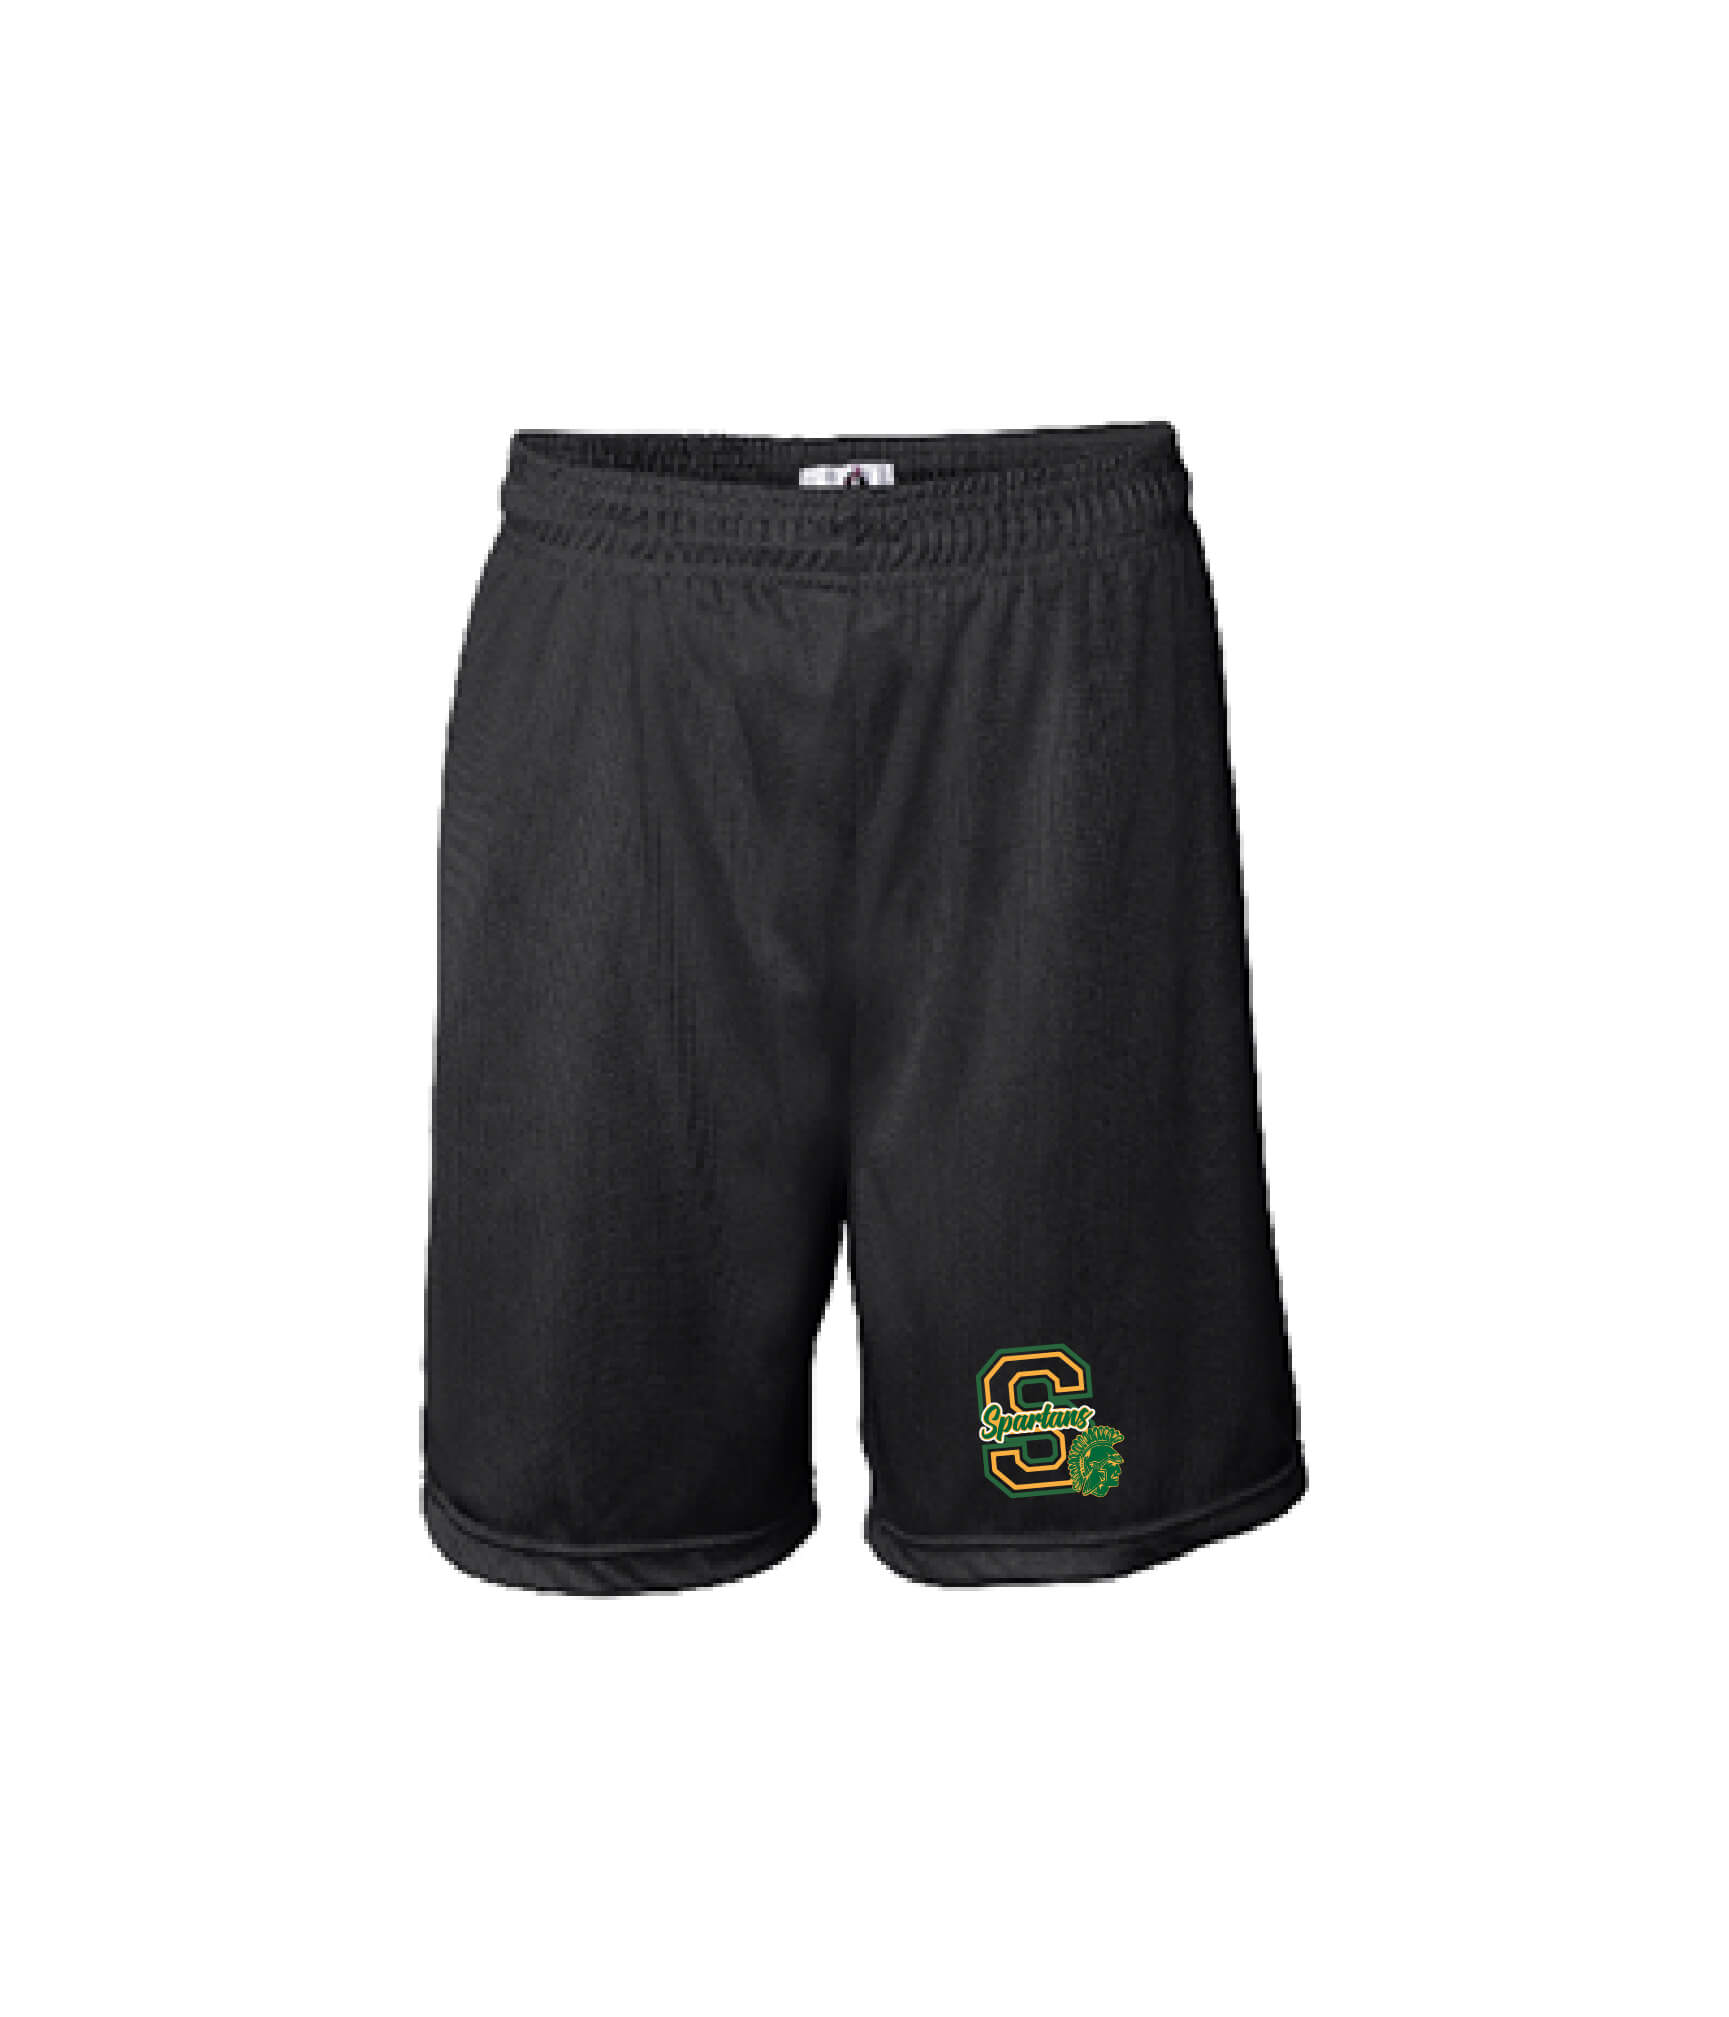 Badger Mini Mesh 7” Inseam Shorts Spartans S black